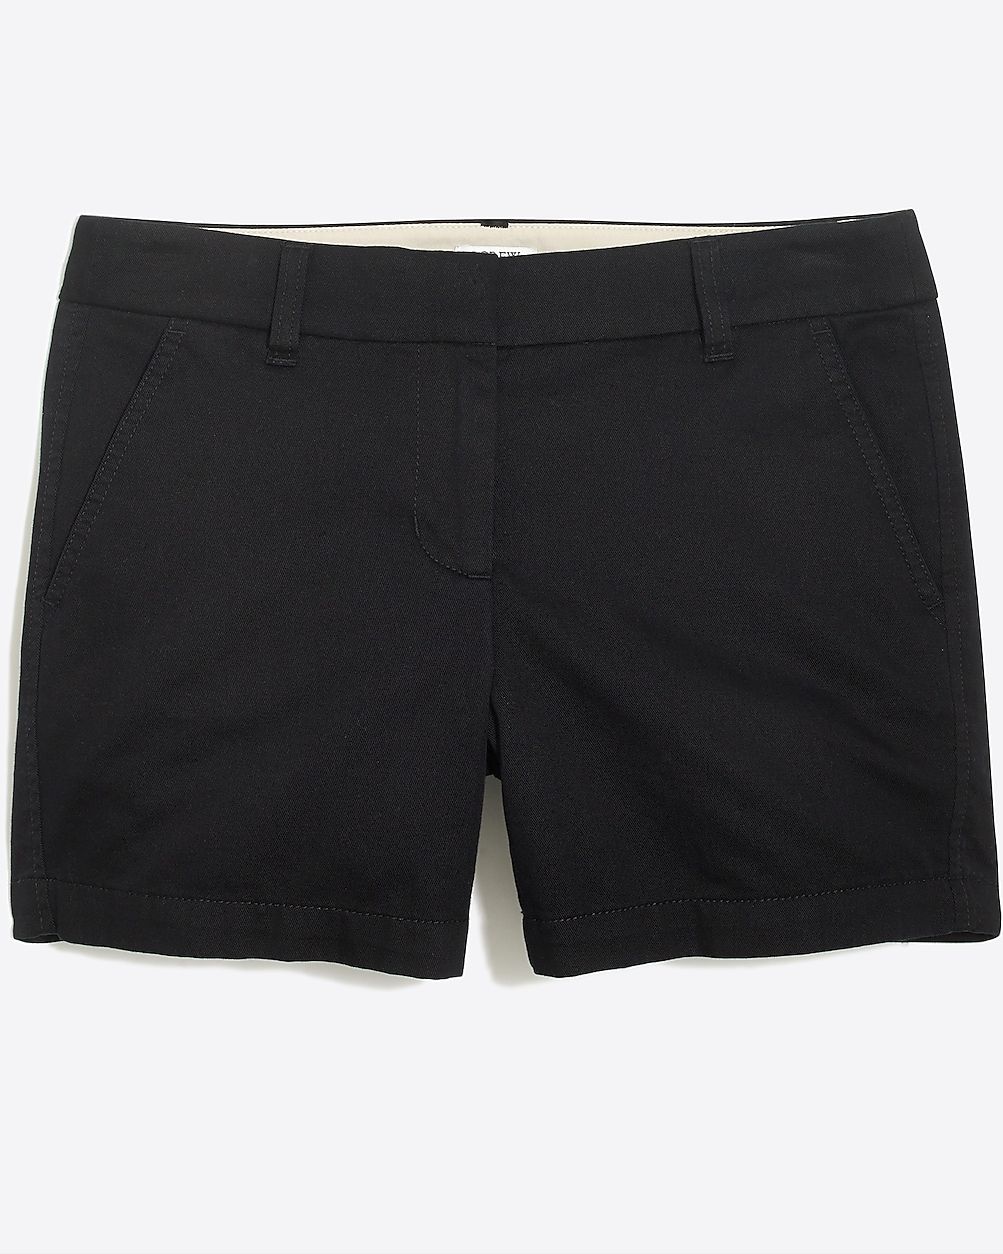 Classic chino shorts 5 inch | J.Crew Factory